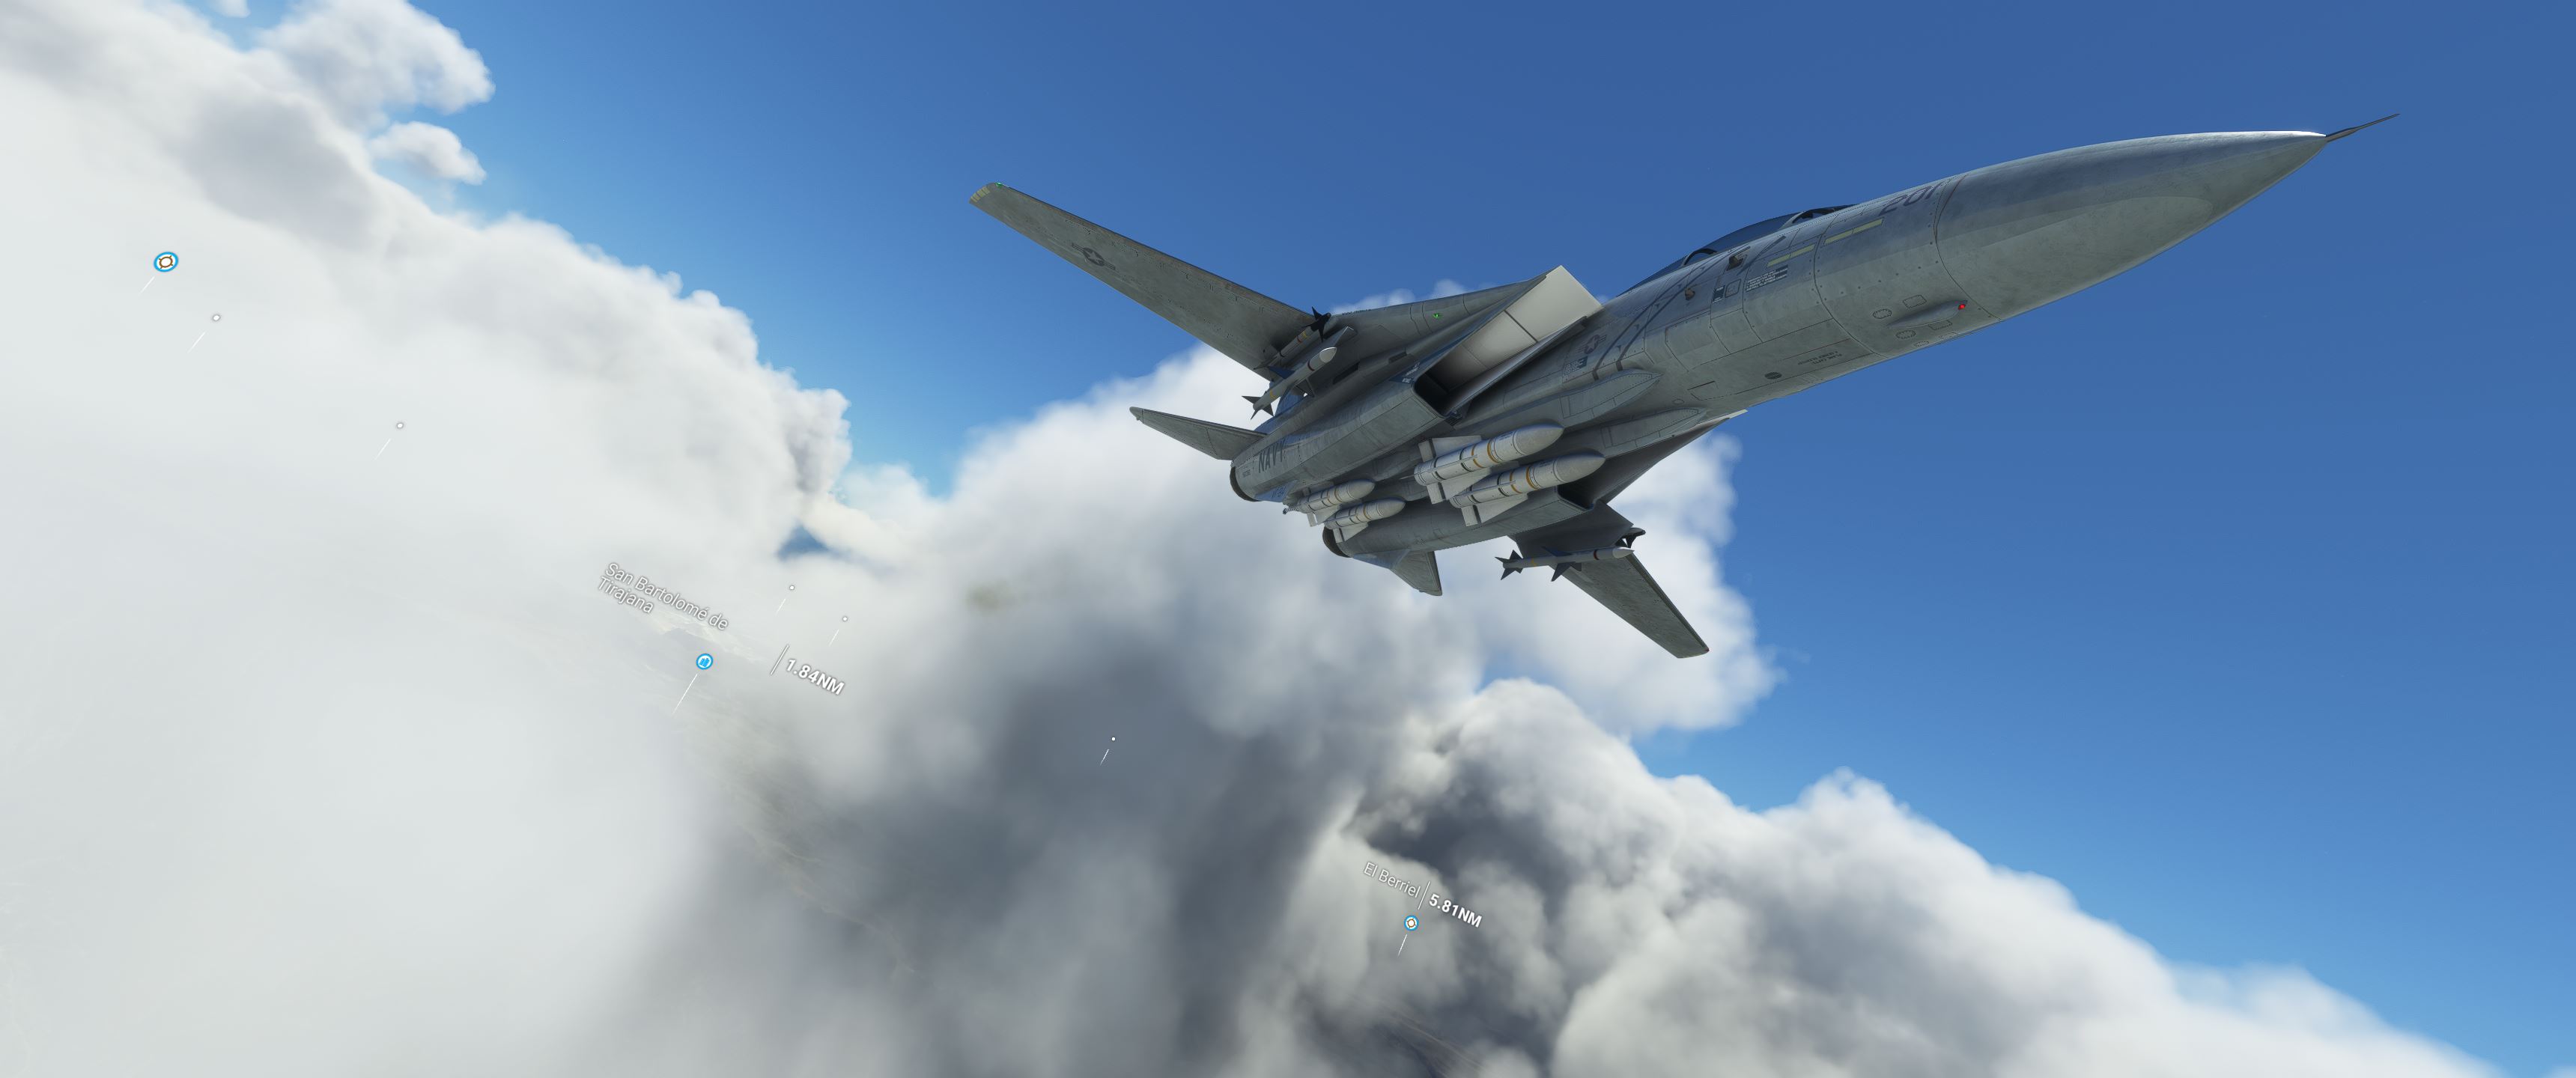 2022-07-01 15_37_58-Microsoft Flight Simulator - 1.26.5.0.jpg